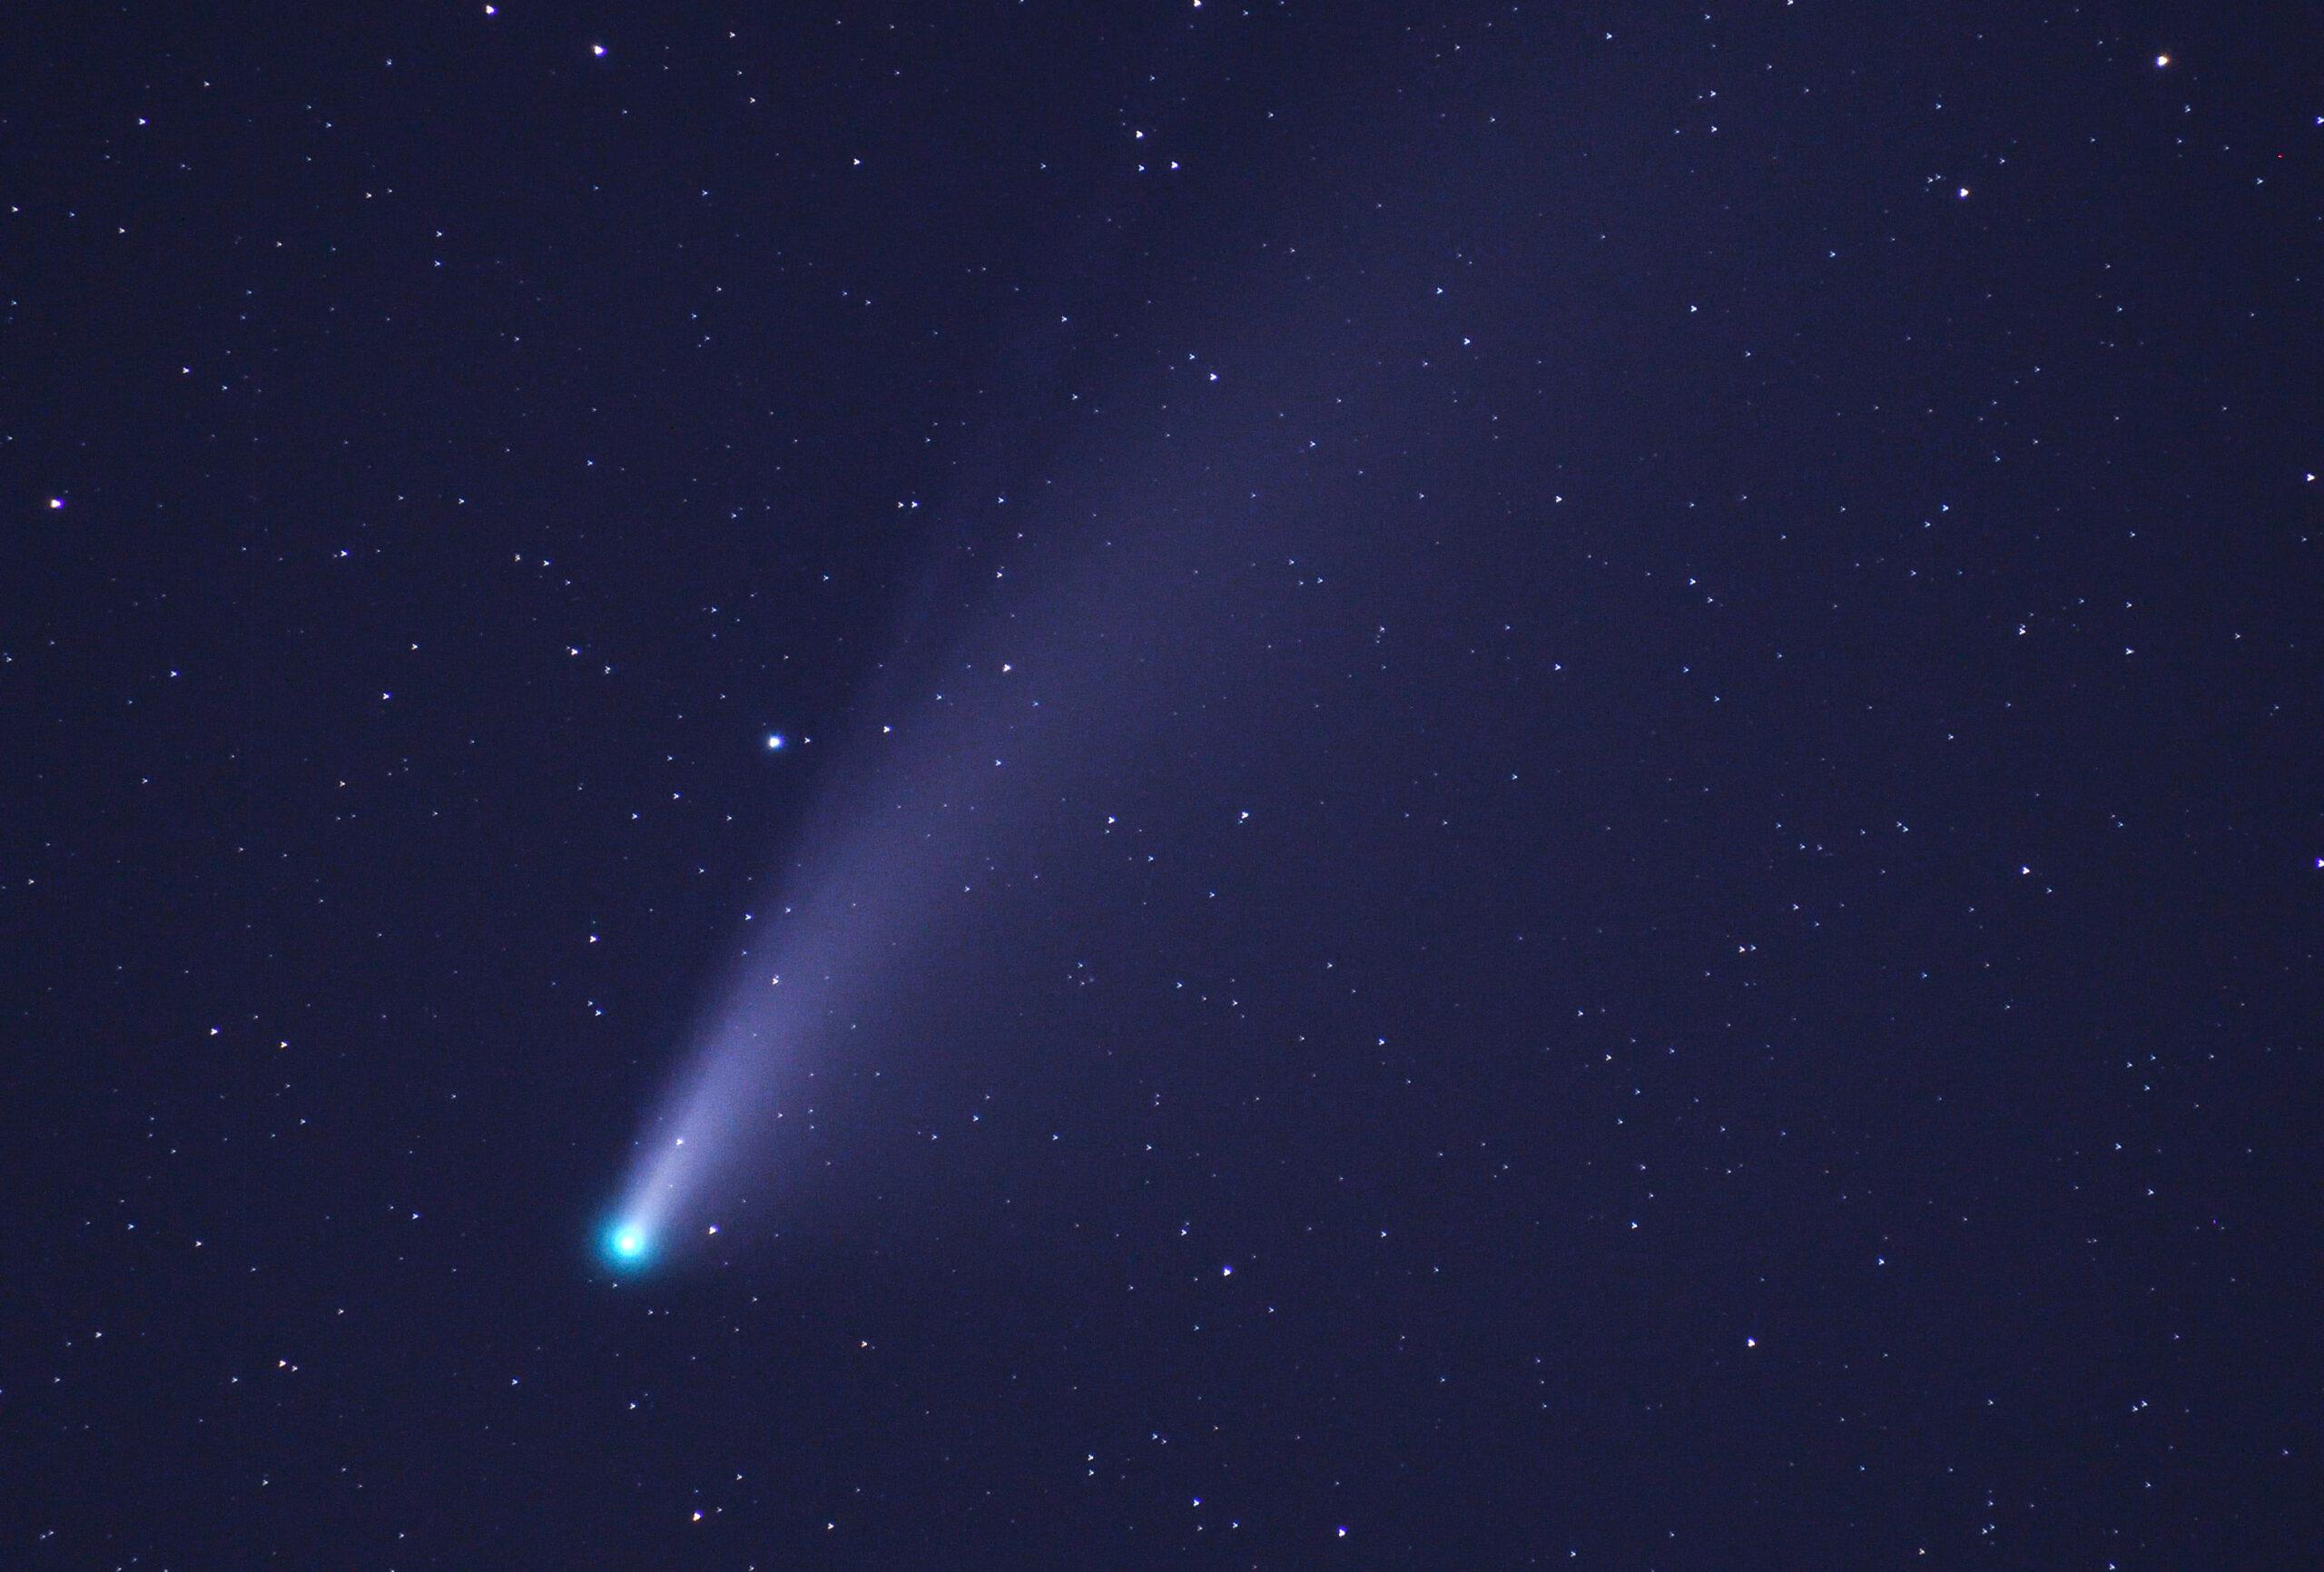 Meteor streaming across the night sky